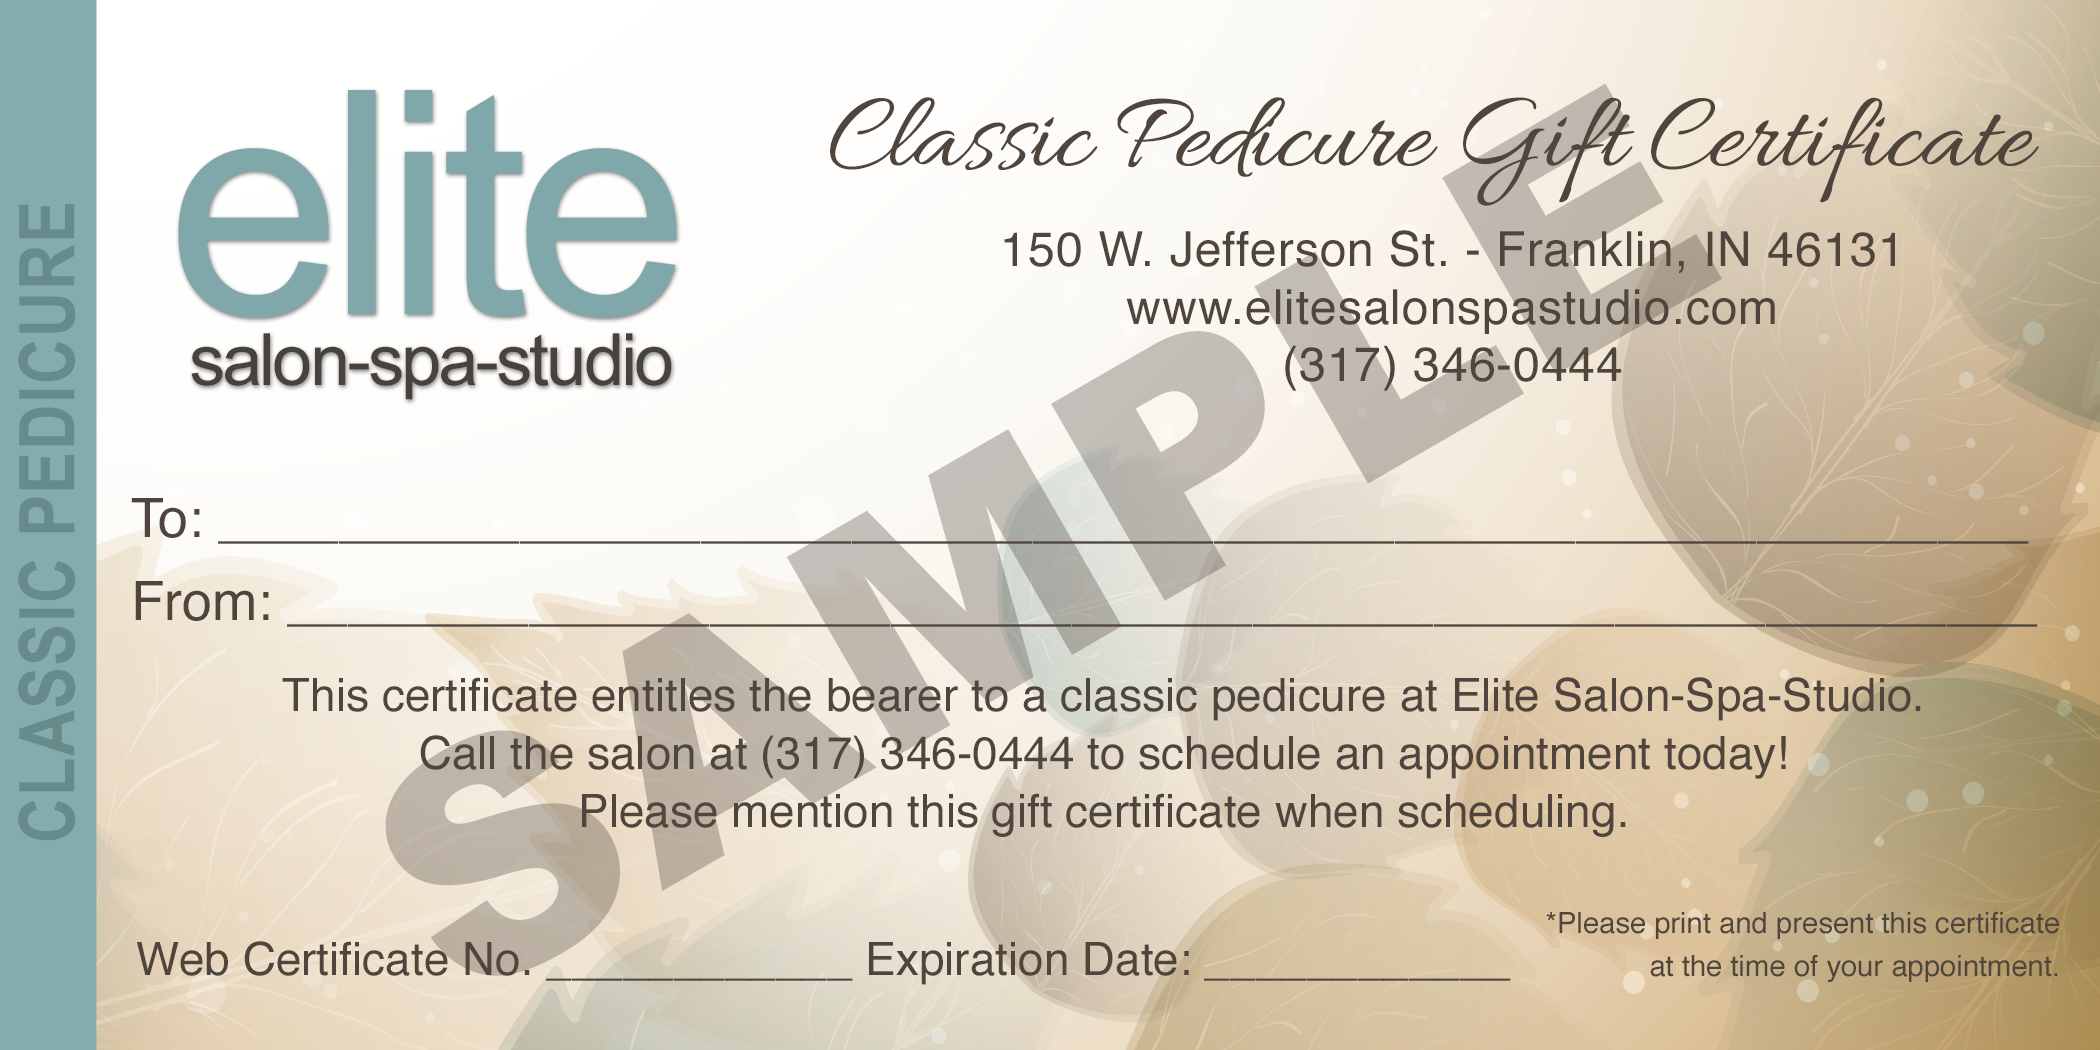 pedicure-gift-certificate-sample-elite-salon-spa-studio